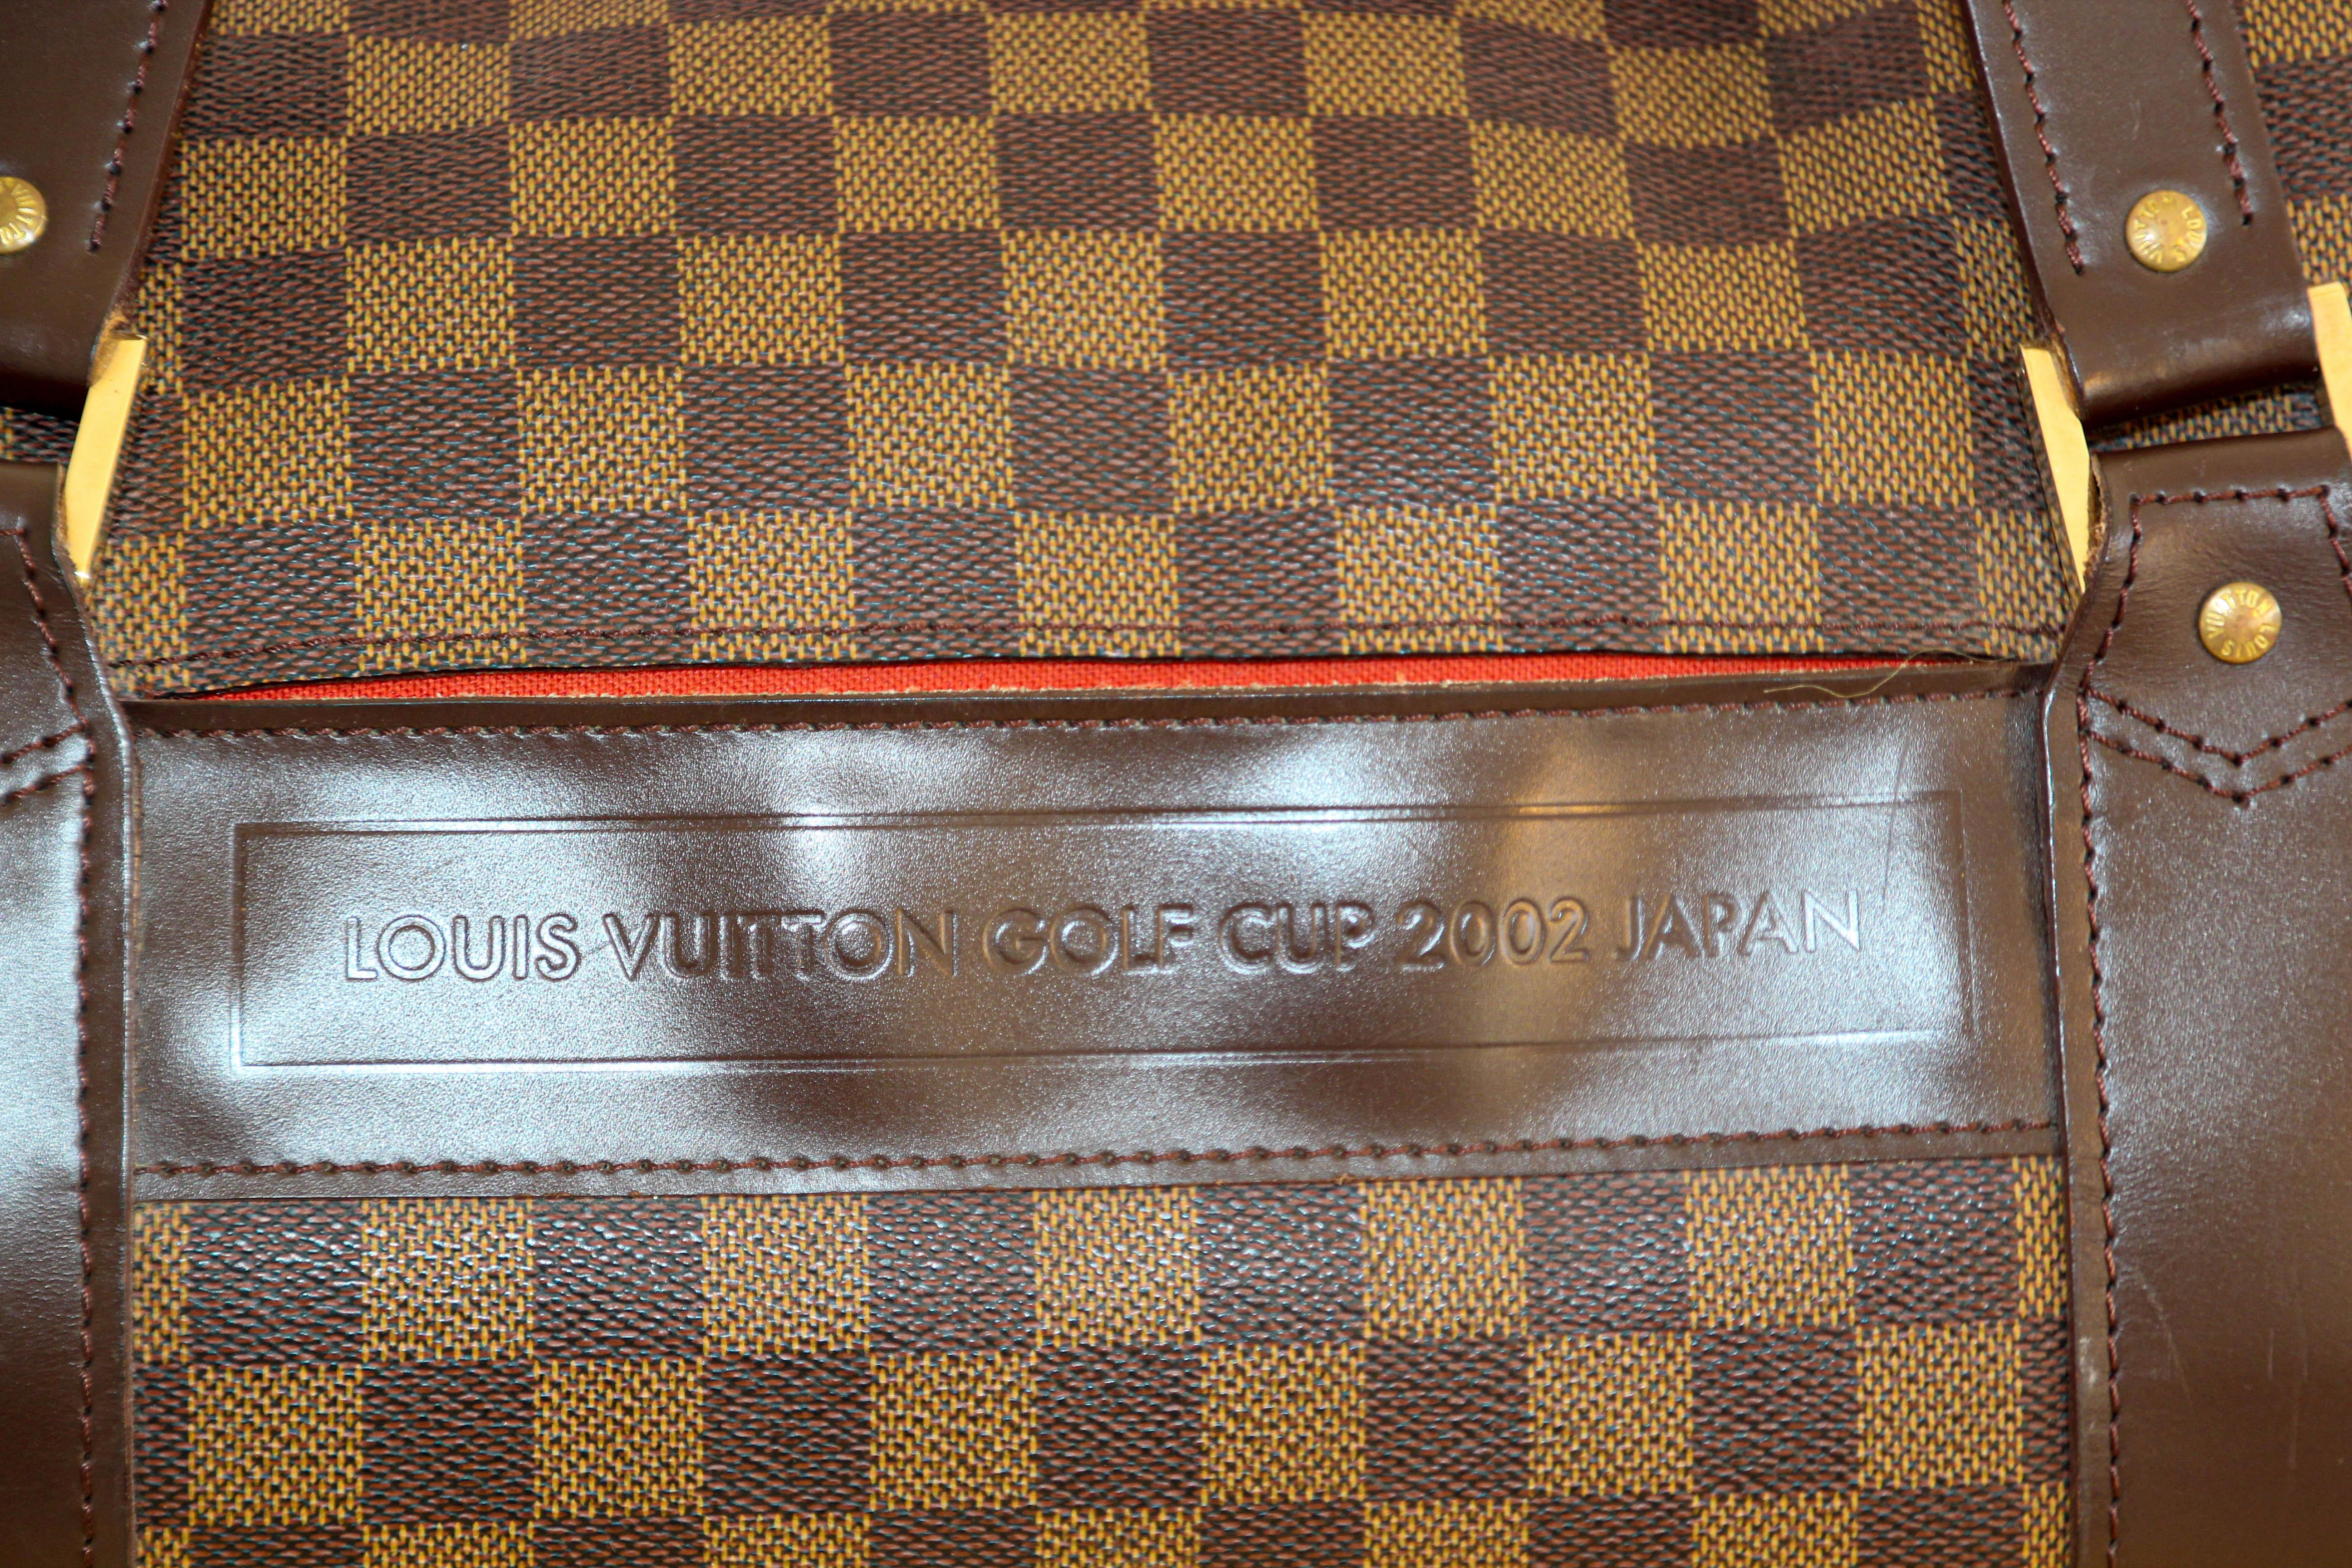 Brown Louis Vuitton Golf Cup 2002 Japan Sac Polochon Duffle Damier For Sale